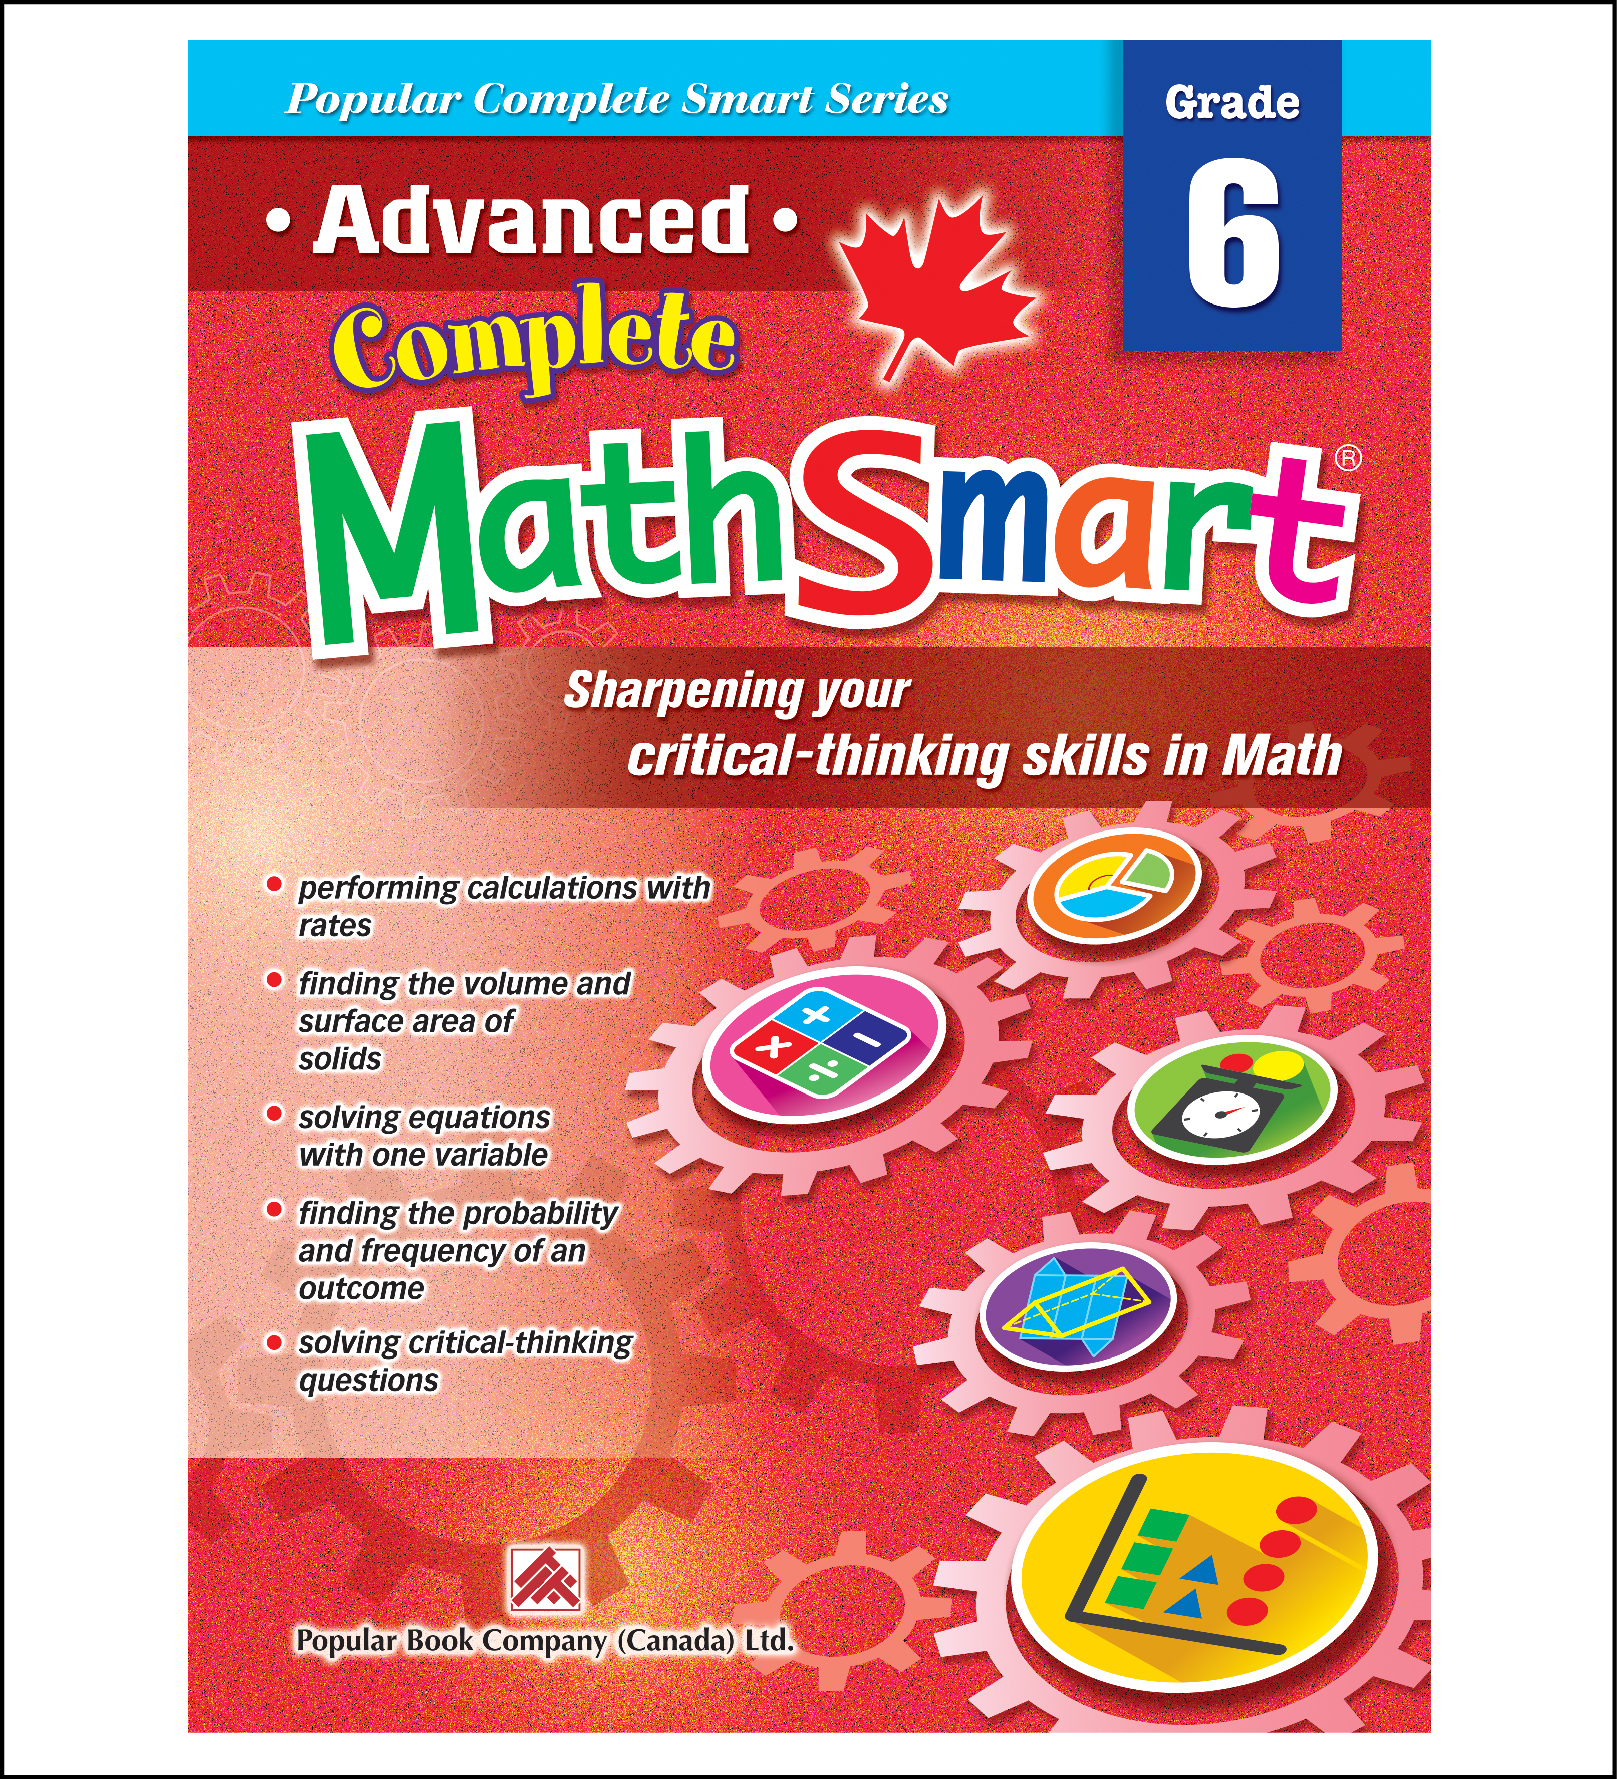 Advanced Complete MathSmart Grade 6 Popular Book Company Canada Ltd 